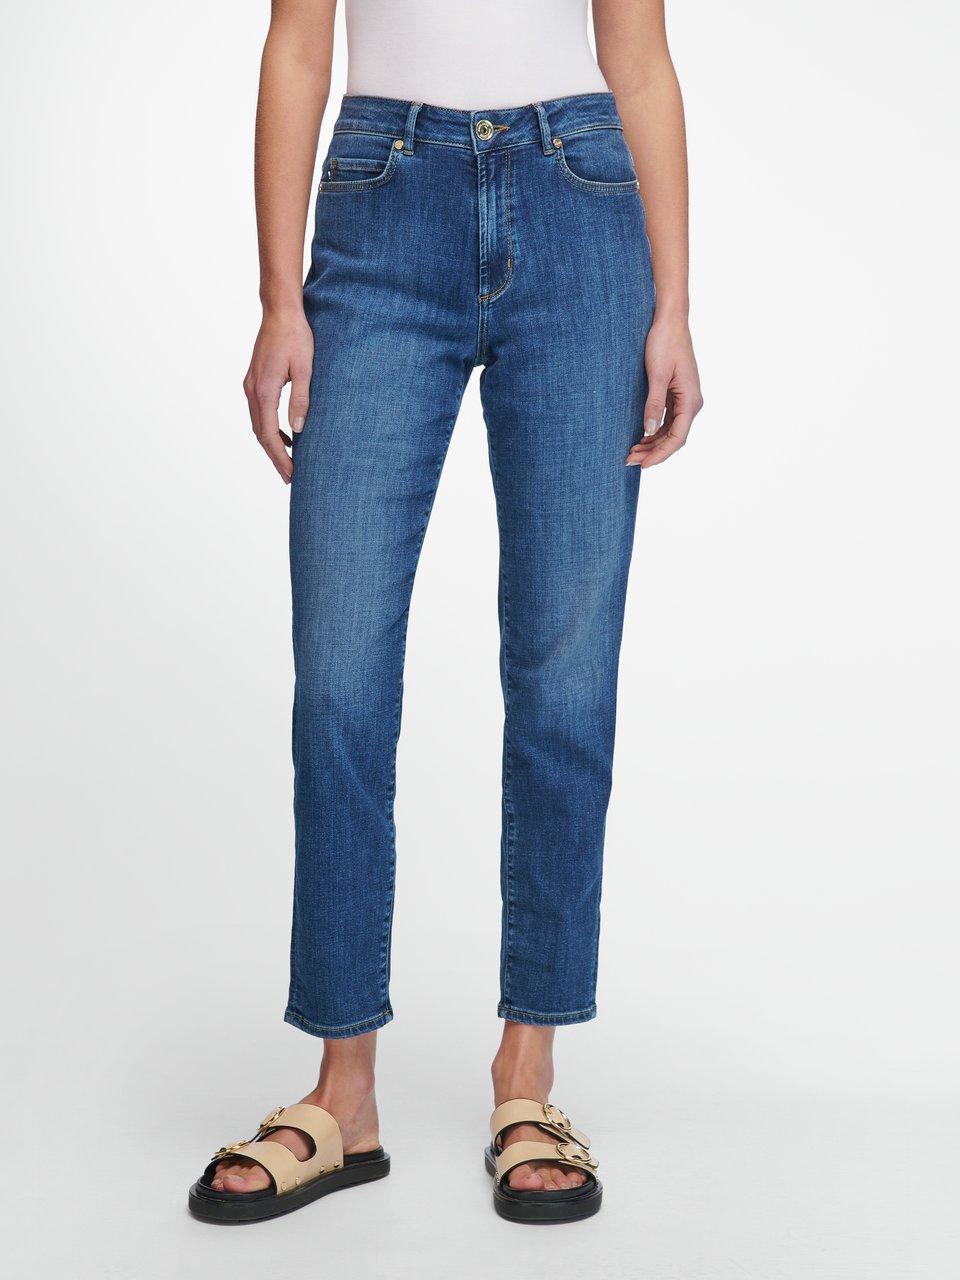 Joop! - Ankle-length jeans in 5-pocket - denim blue style